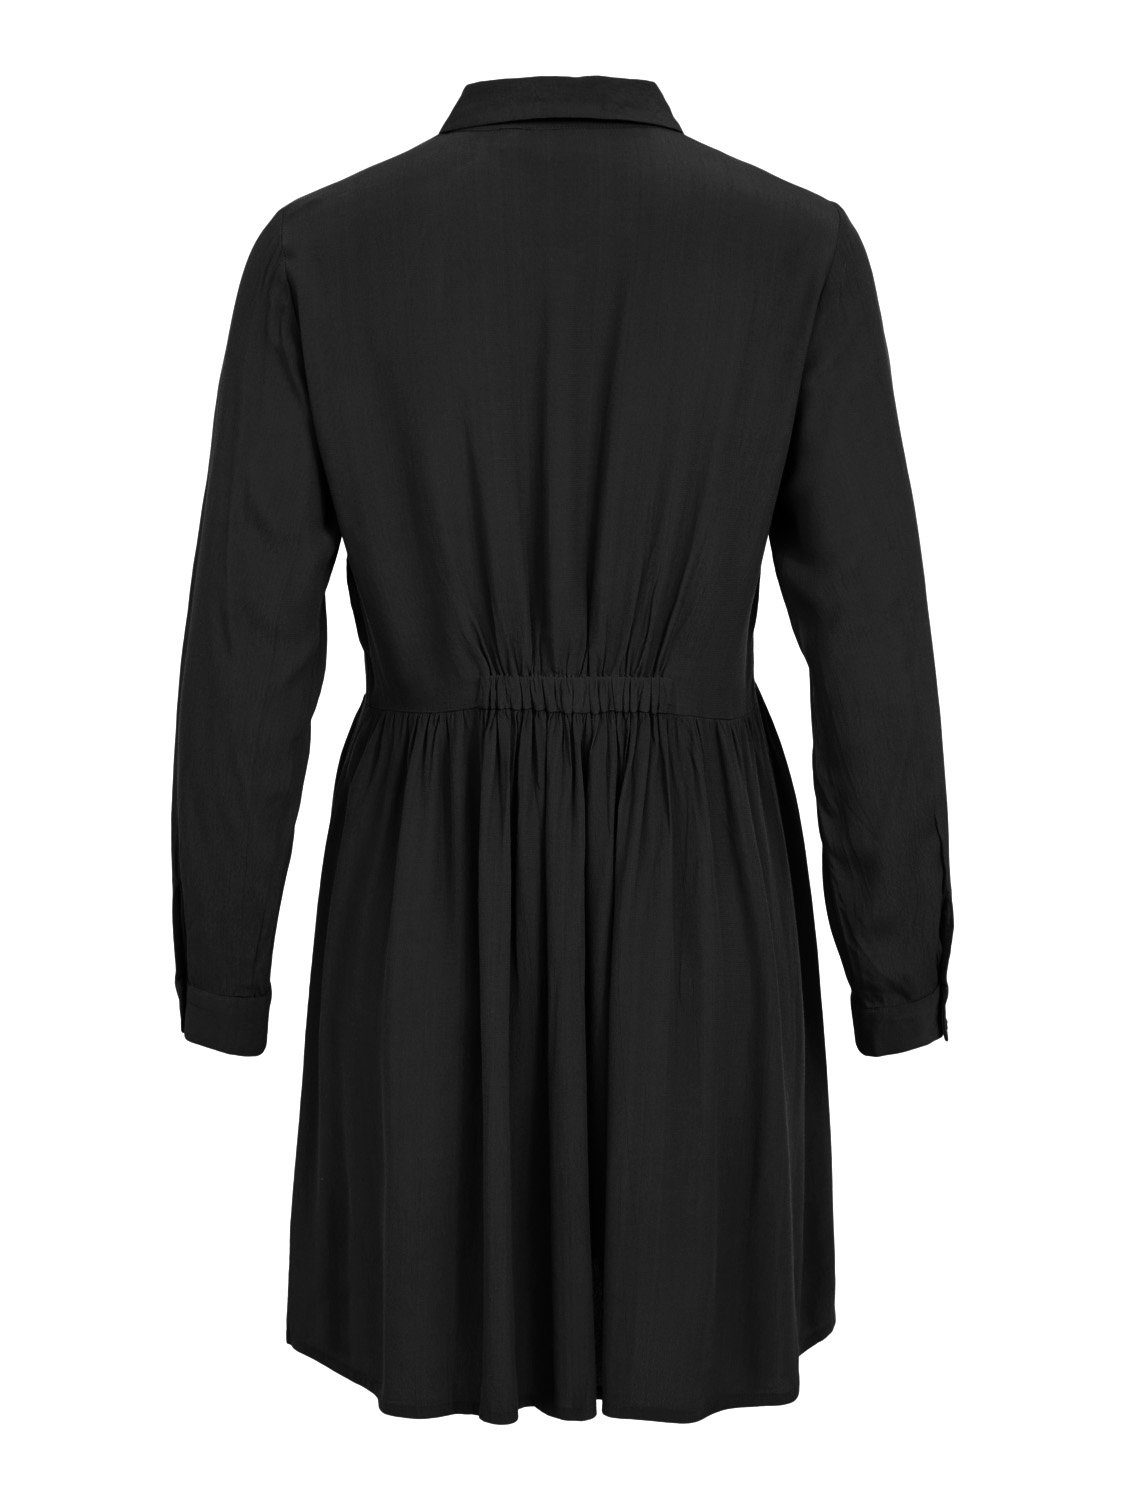 (kurz) Kleid in Schwarz Dress Mini Knielang VIFINI Langarm Print Shirtkleid Vila Geblümtes 4608